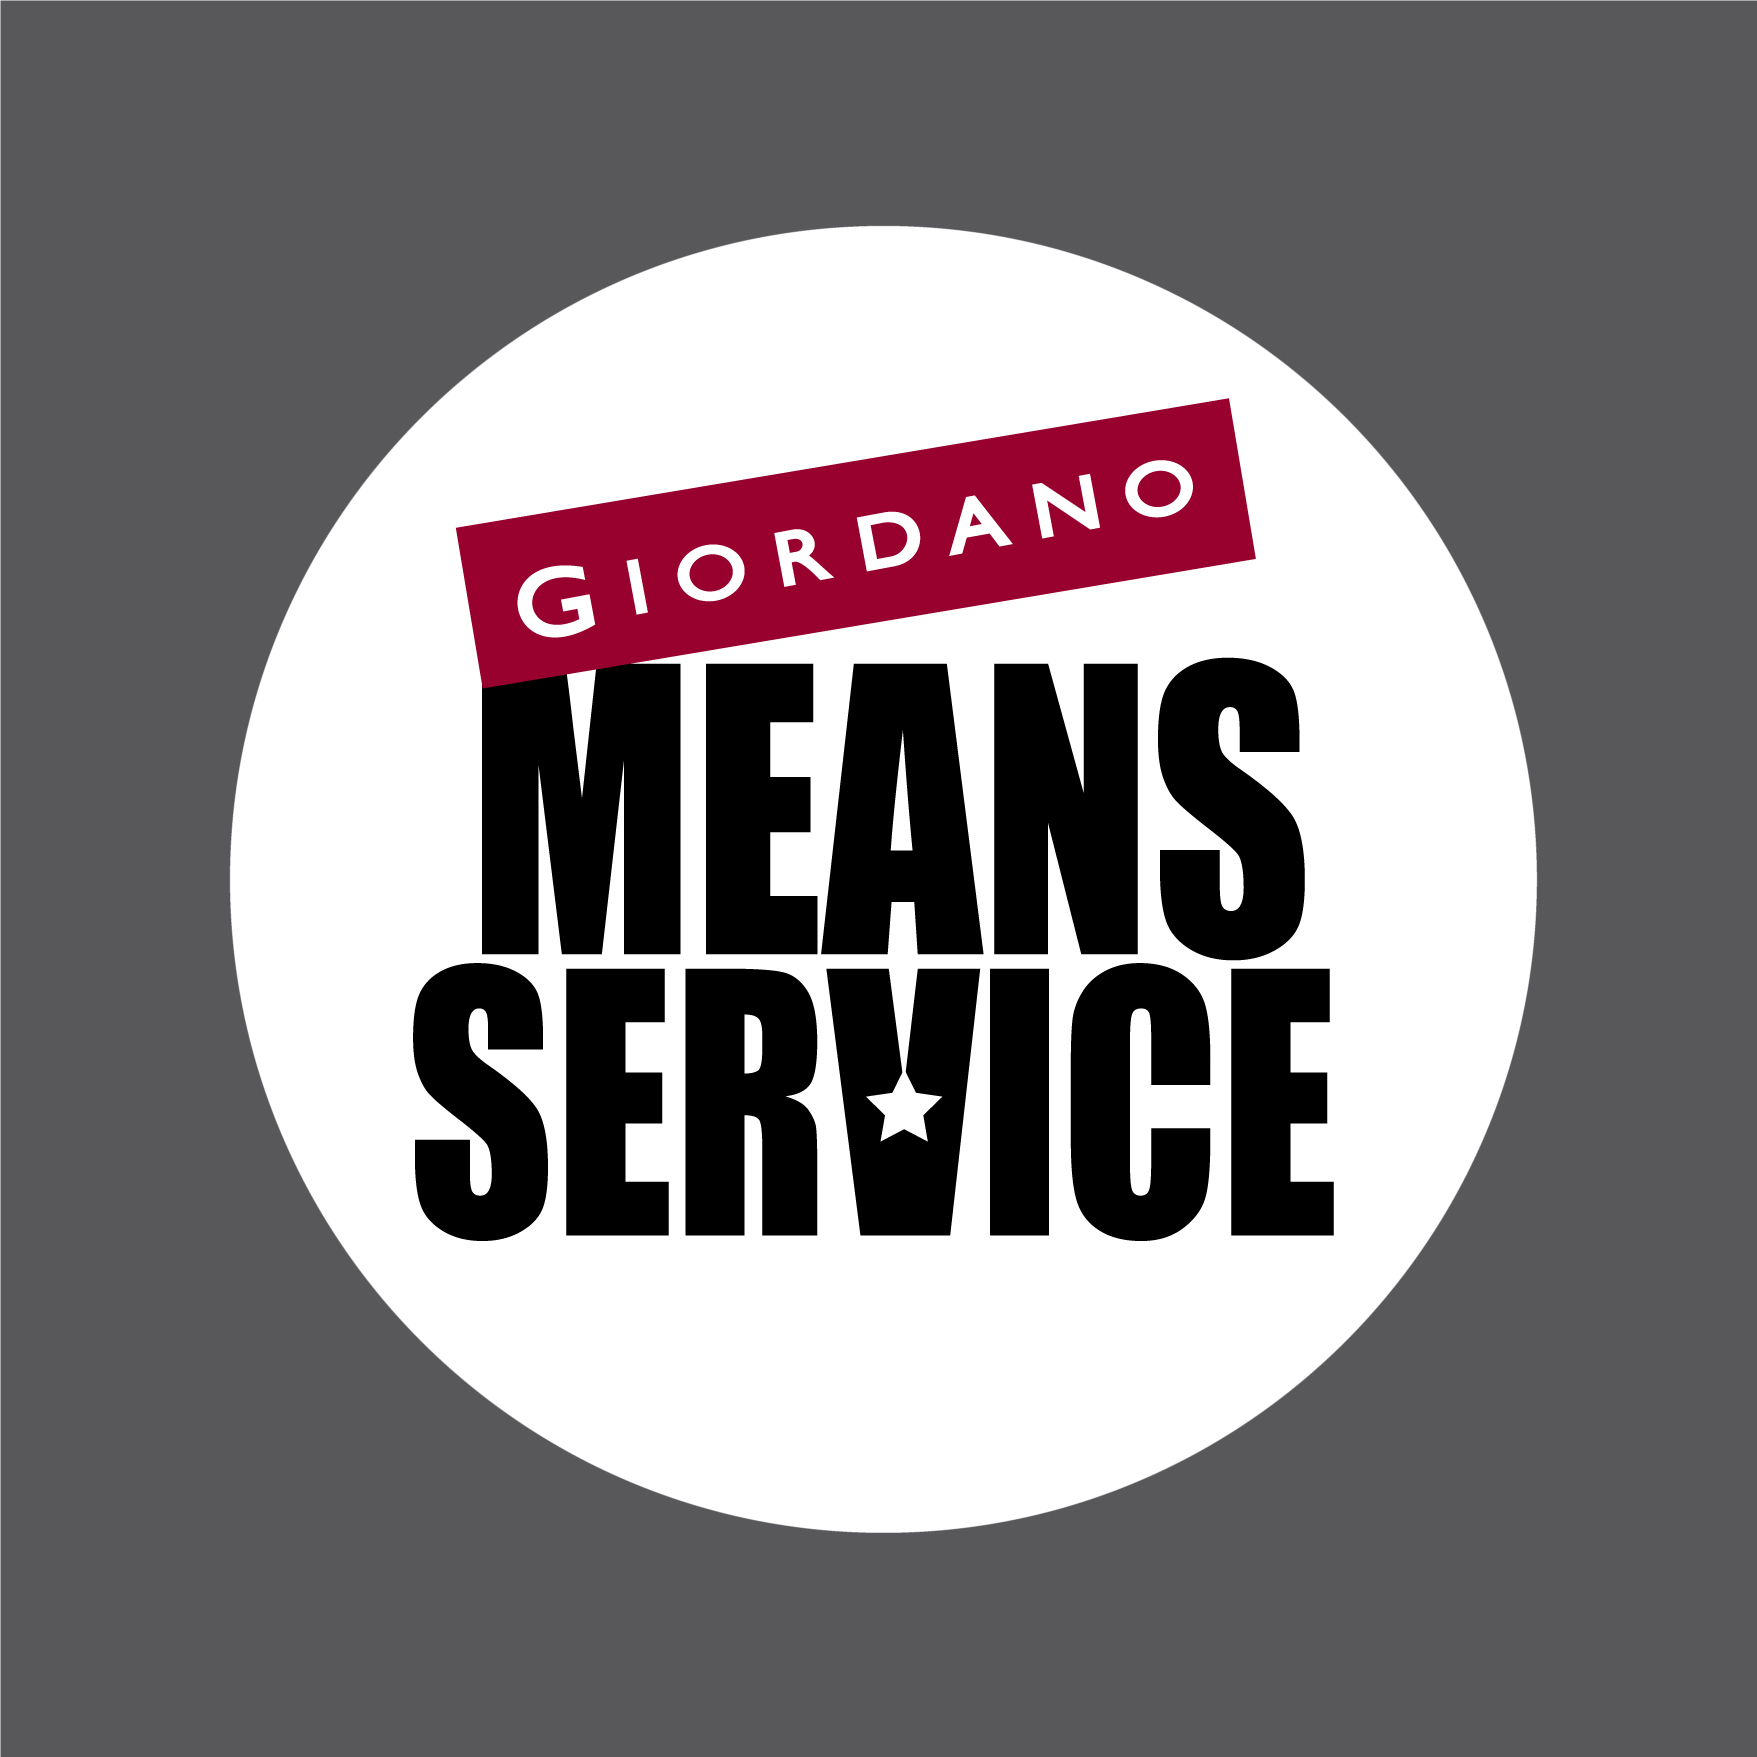 Giordano means service - Ahmadullah, CEO